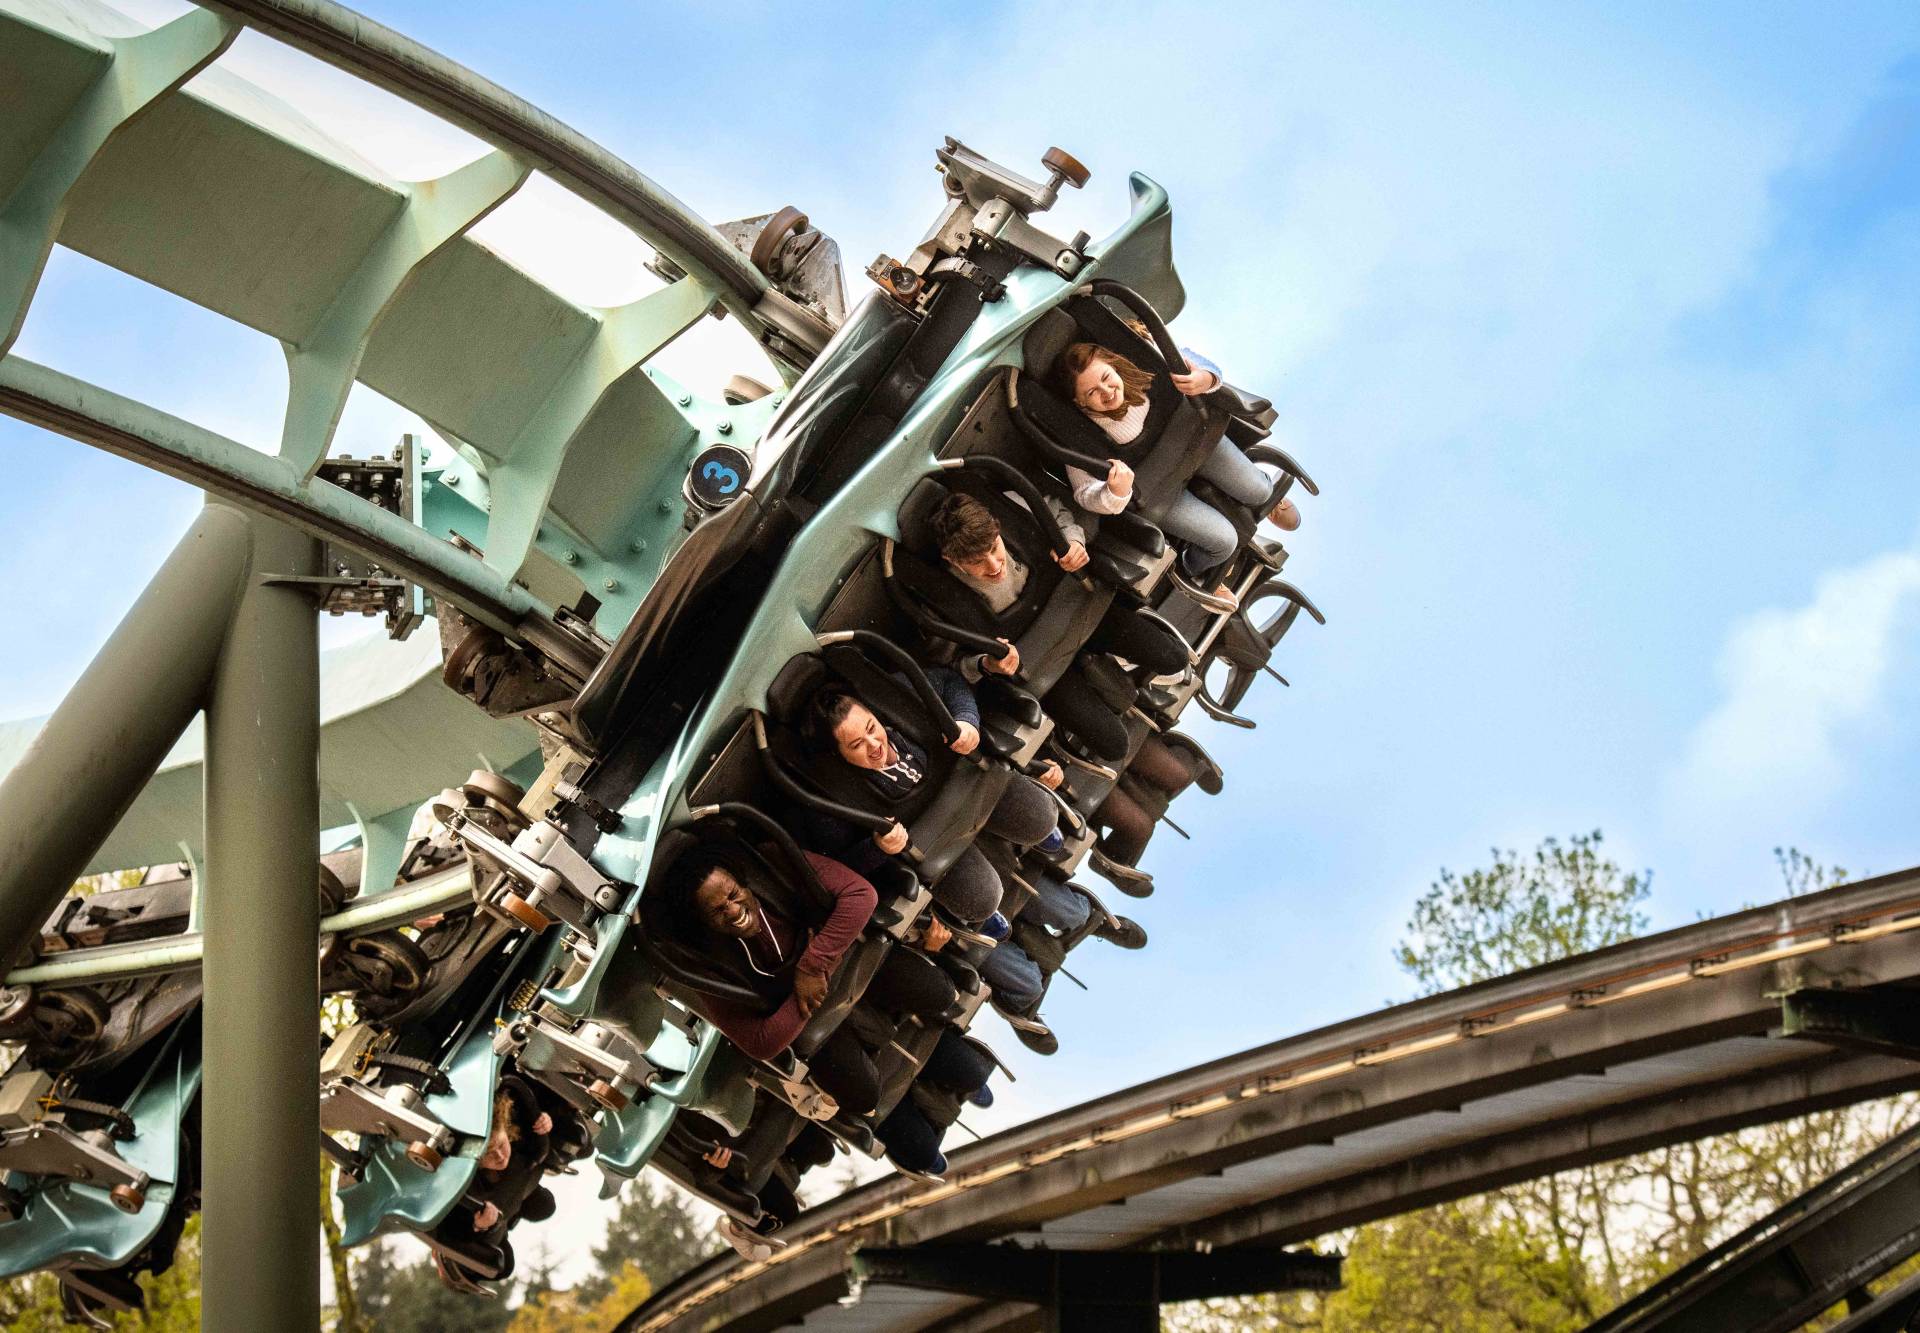 Galactica Theme Park Ride At Alton Towers Resort - roblox theme park tycoon 2 3.5 stars